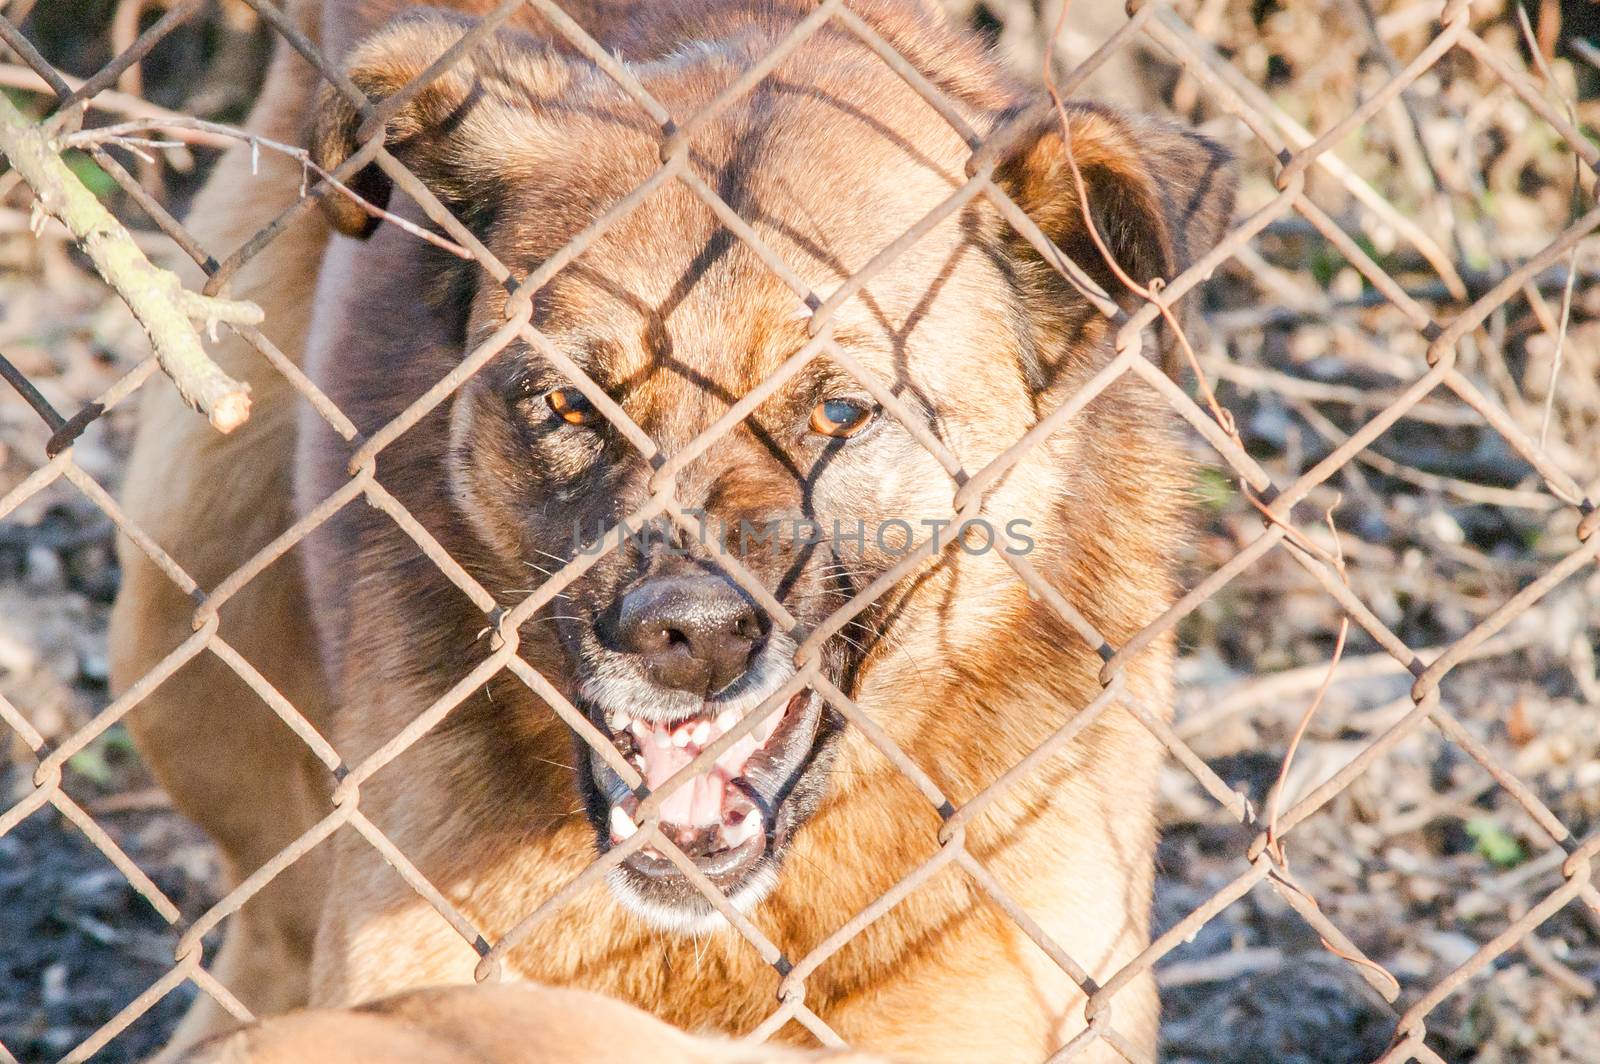 evil dog runs to bite through the mesh fence